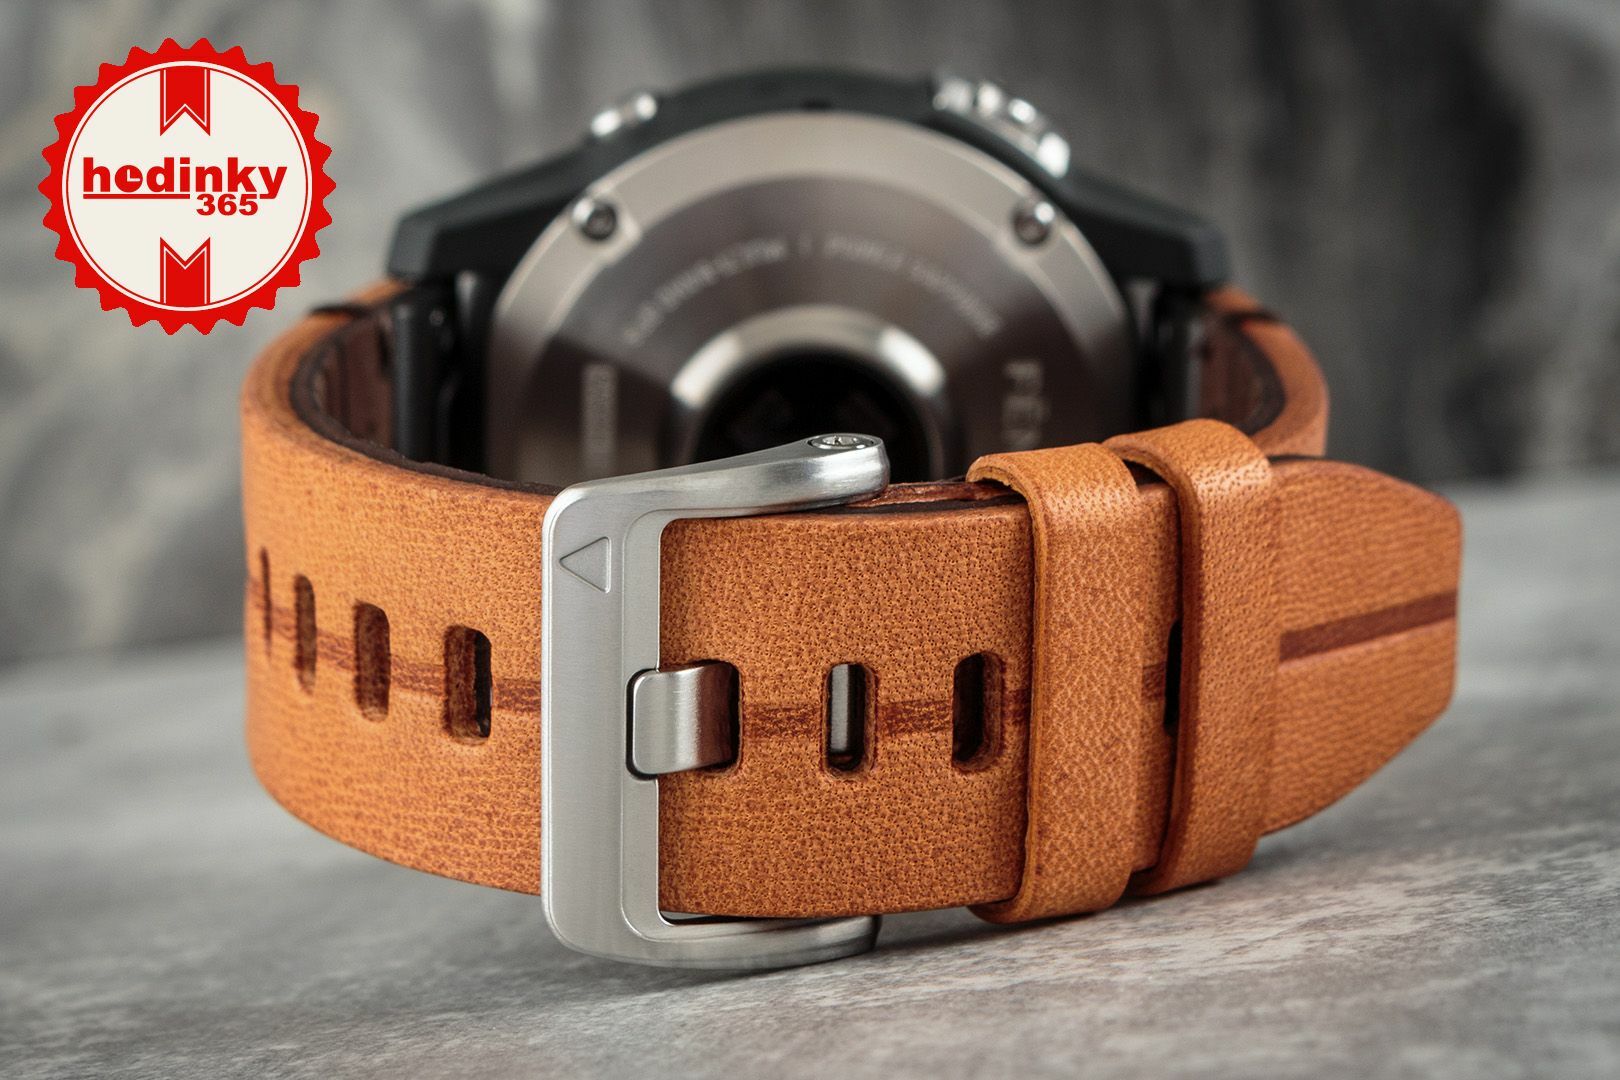 Garmin Fenix Sapphire Titanium / Brown Leather Band (+ silicone strap) | Hodinky-365.com